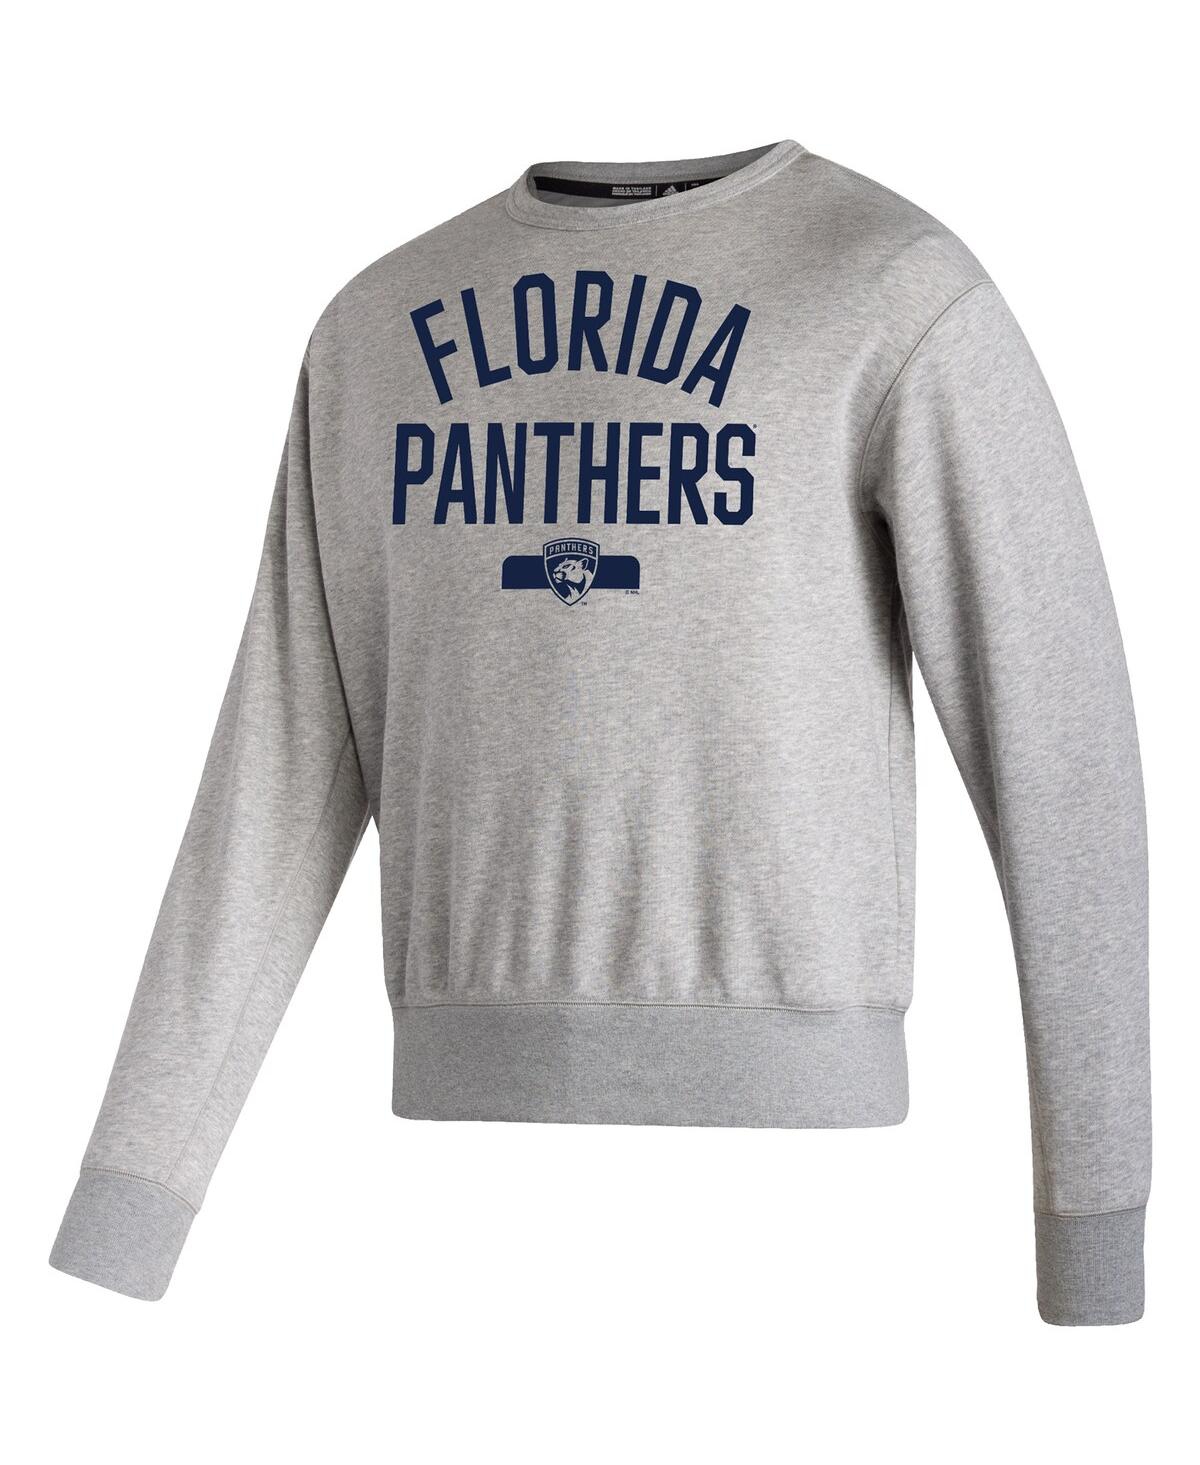 Shop Adidas Originals Men's Adidas Gray Florida Panthers Vintage-like Pullover Sweatshirt